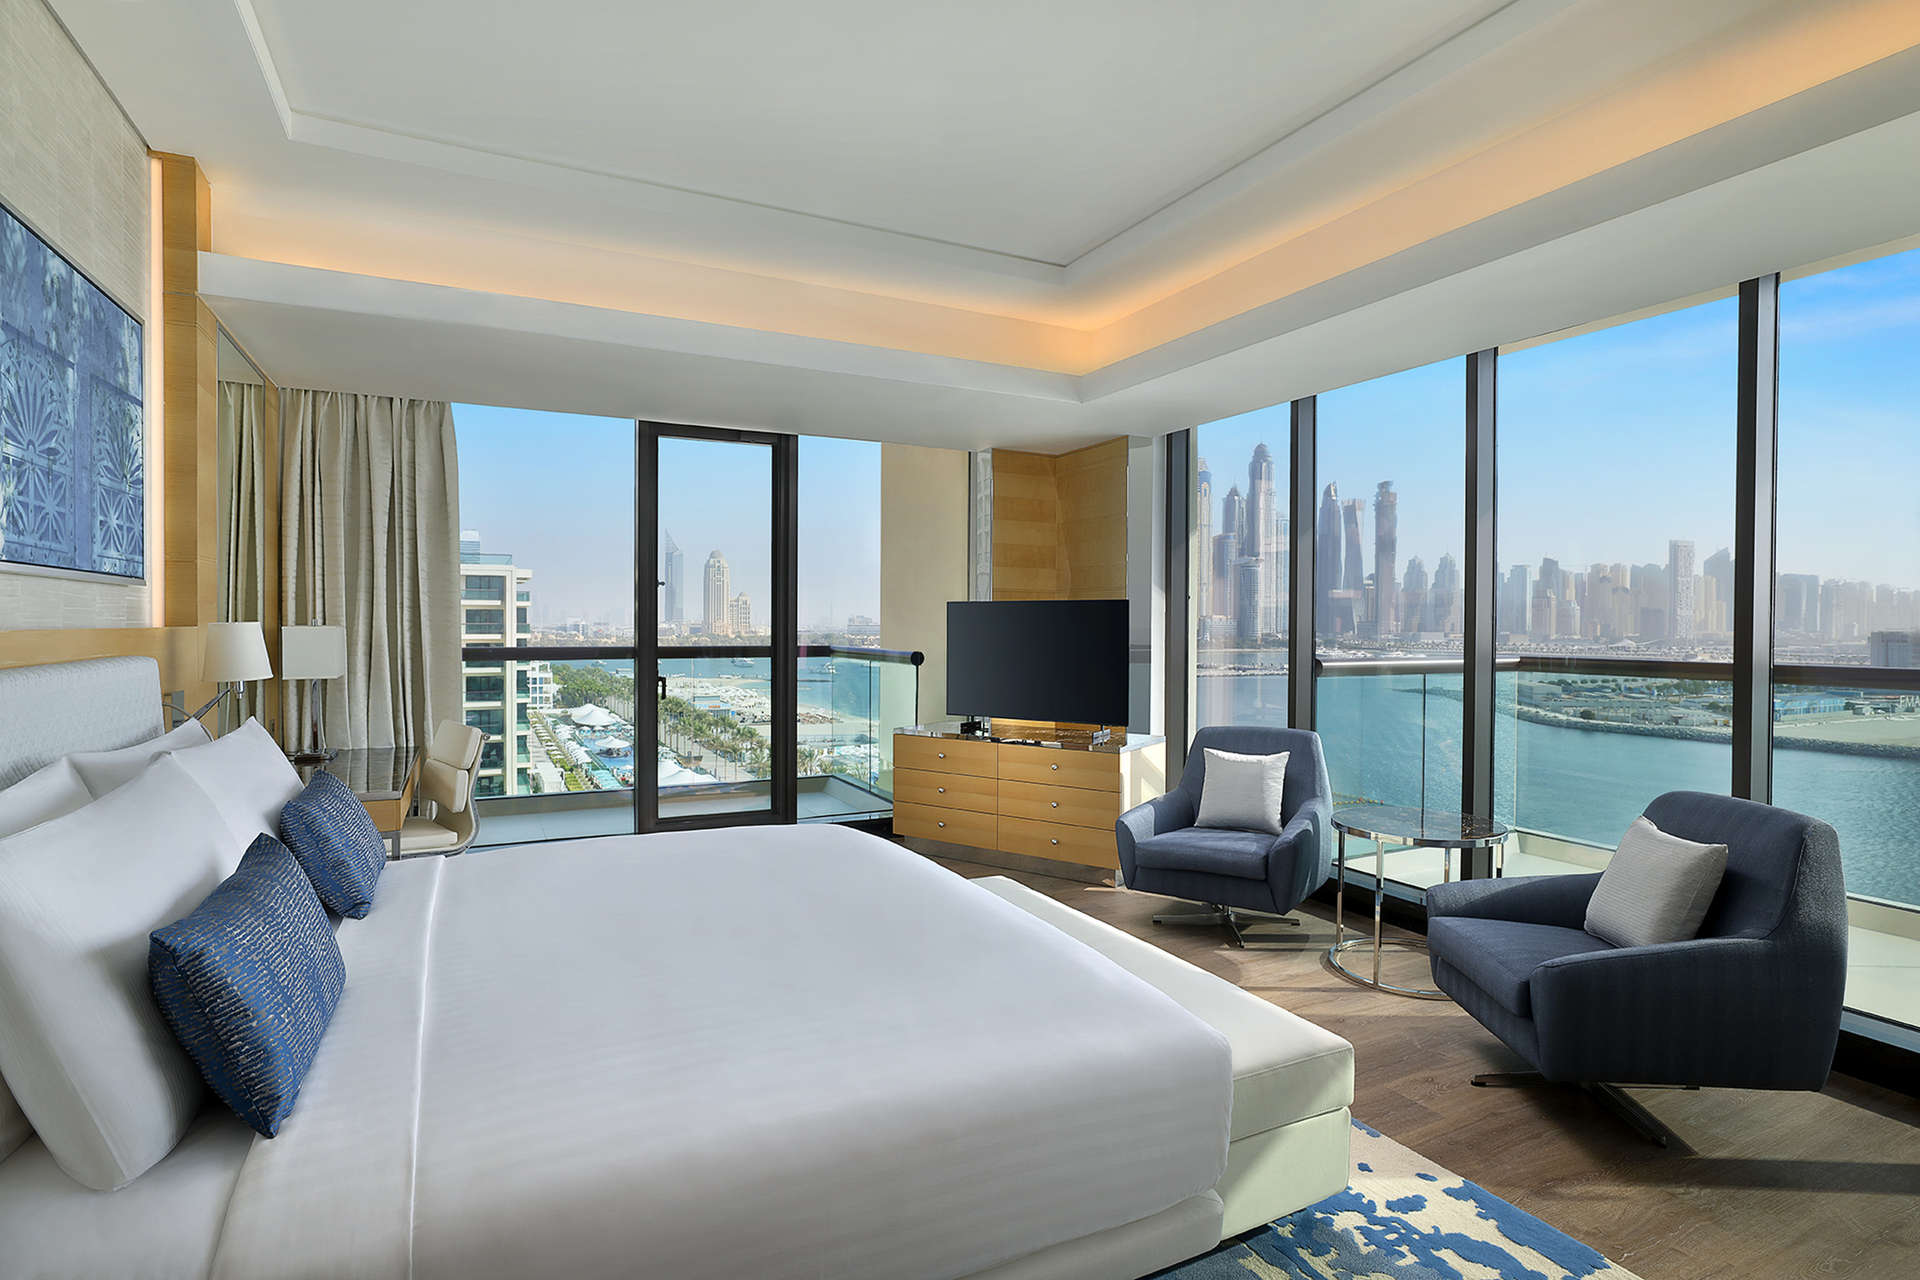 Marriott Resort Palm Jumeirah, Dubai.jpg